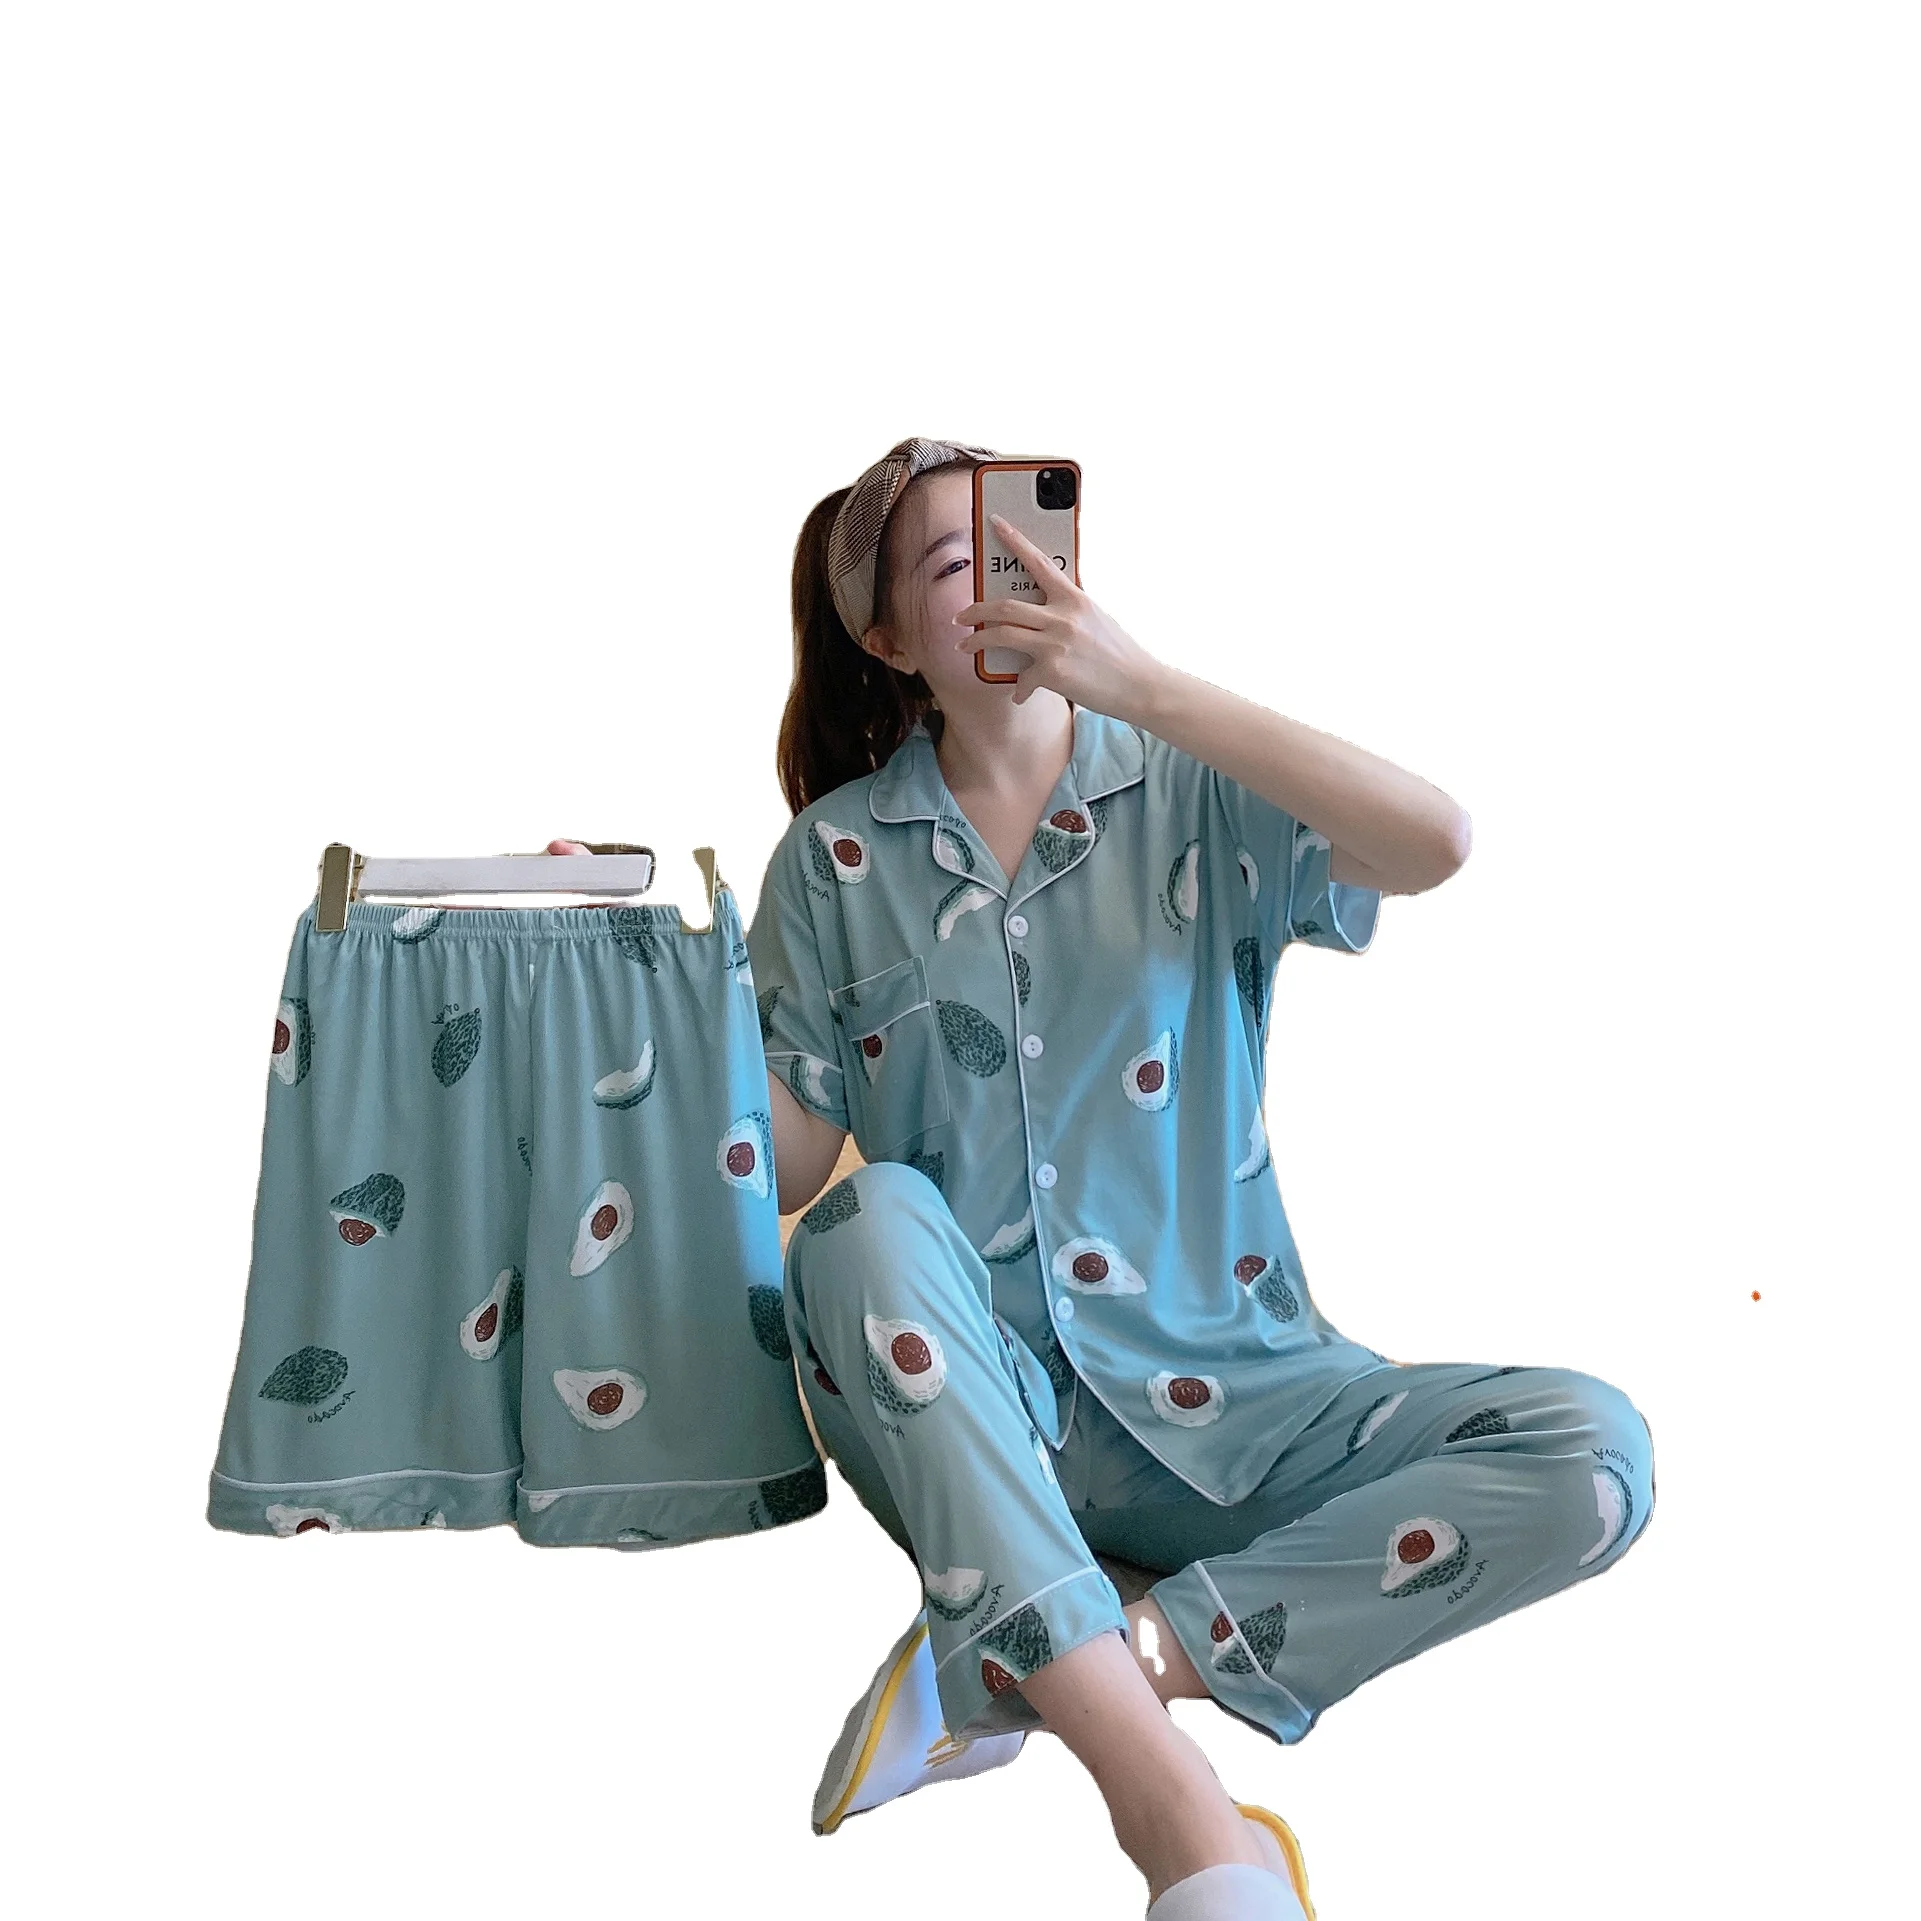 

Korean New Lounge Wear Pillamas 3 Pieces Nightwear Girls Pyjama Fille Pijama Femme Silk Pajama Set Women Sleepwear Home For Lady, Picture shows